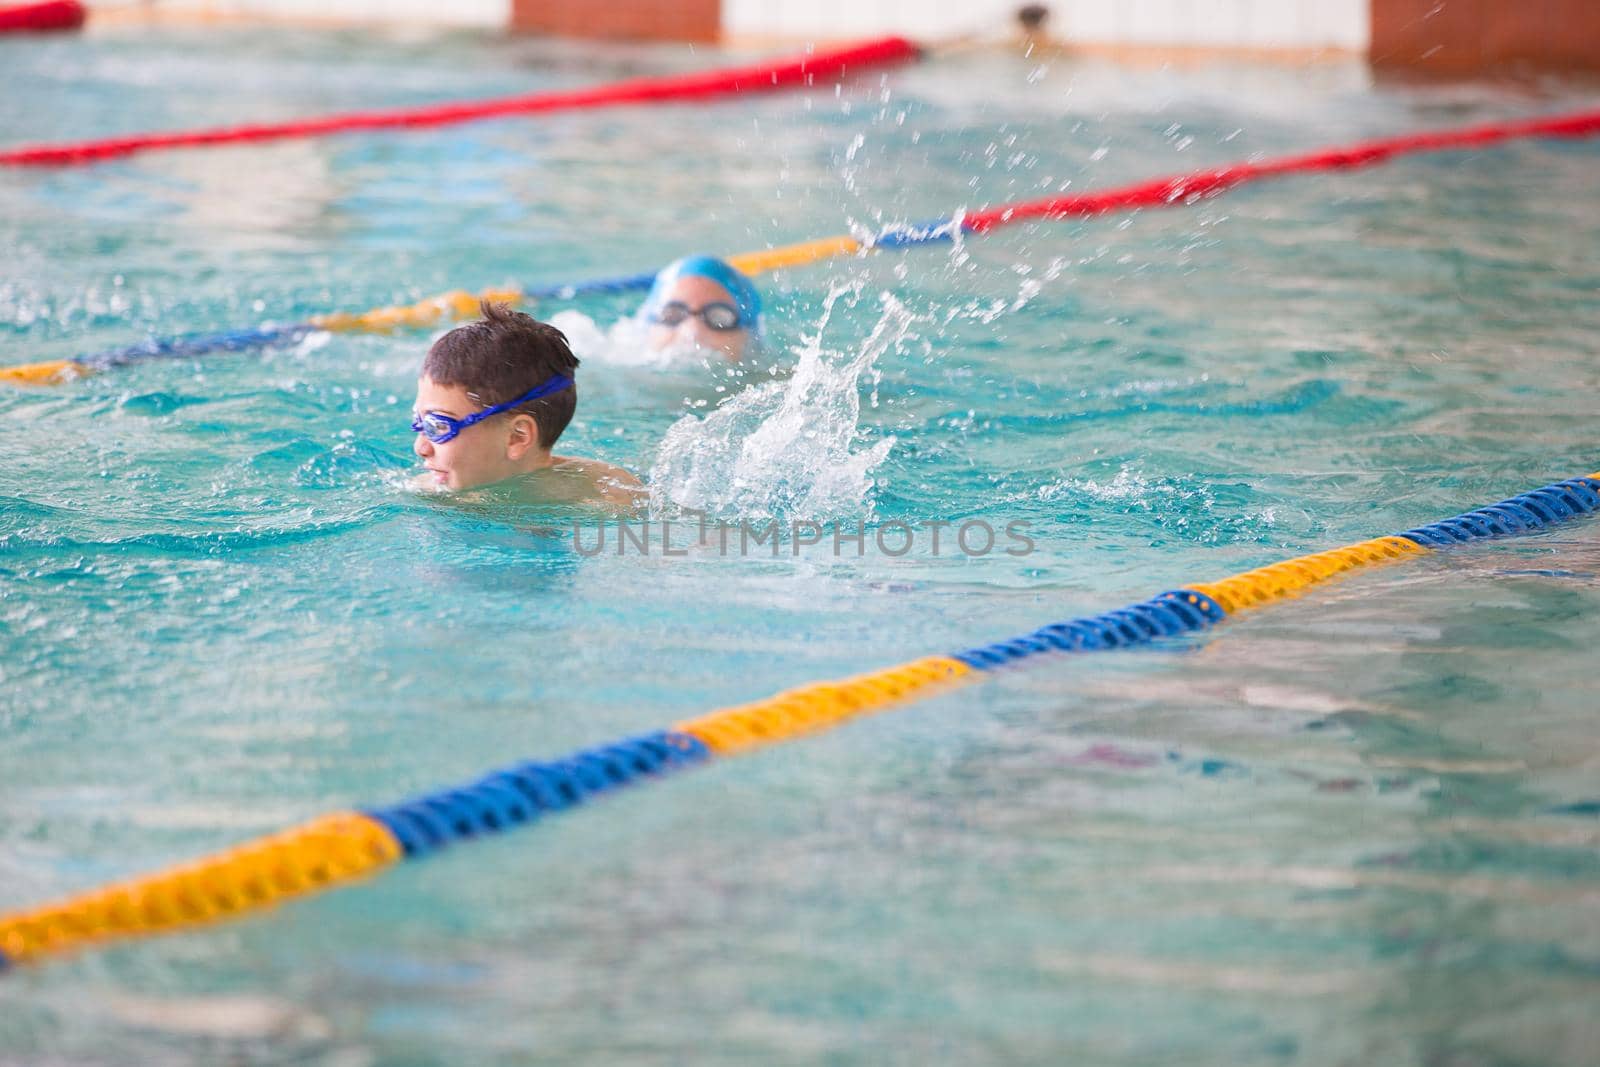 Children's swim training